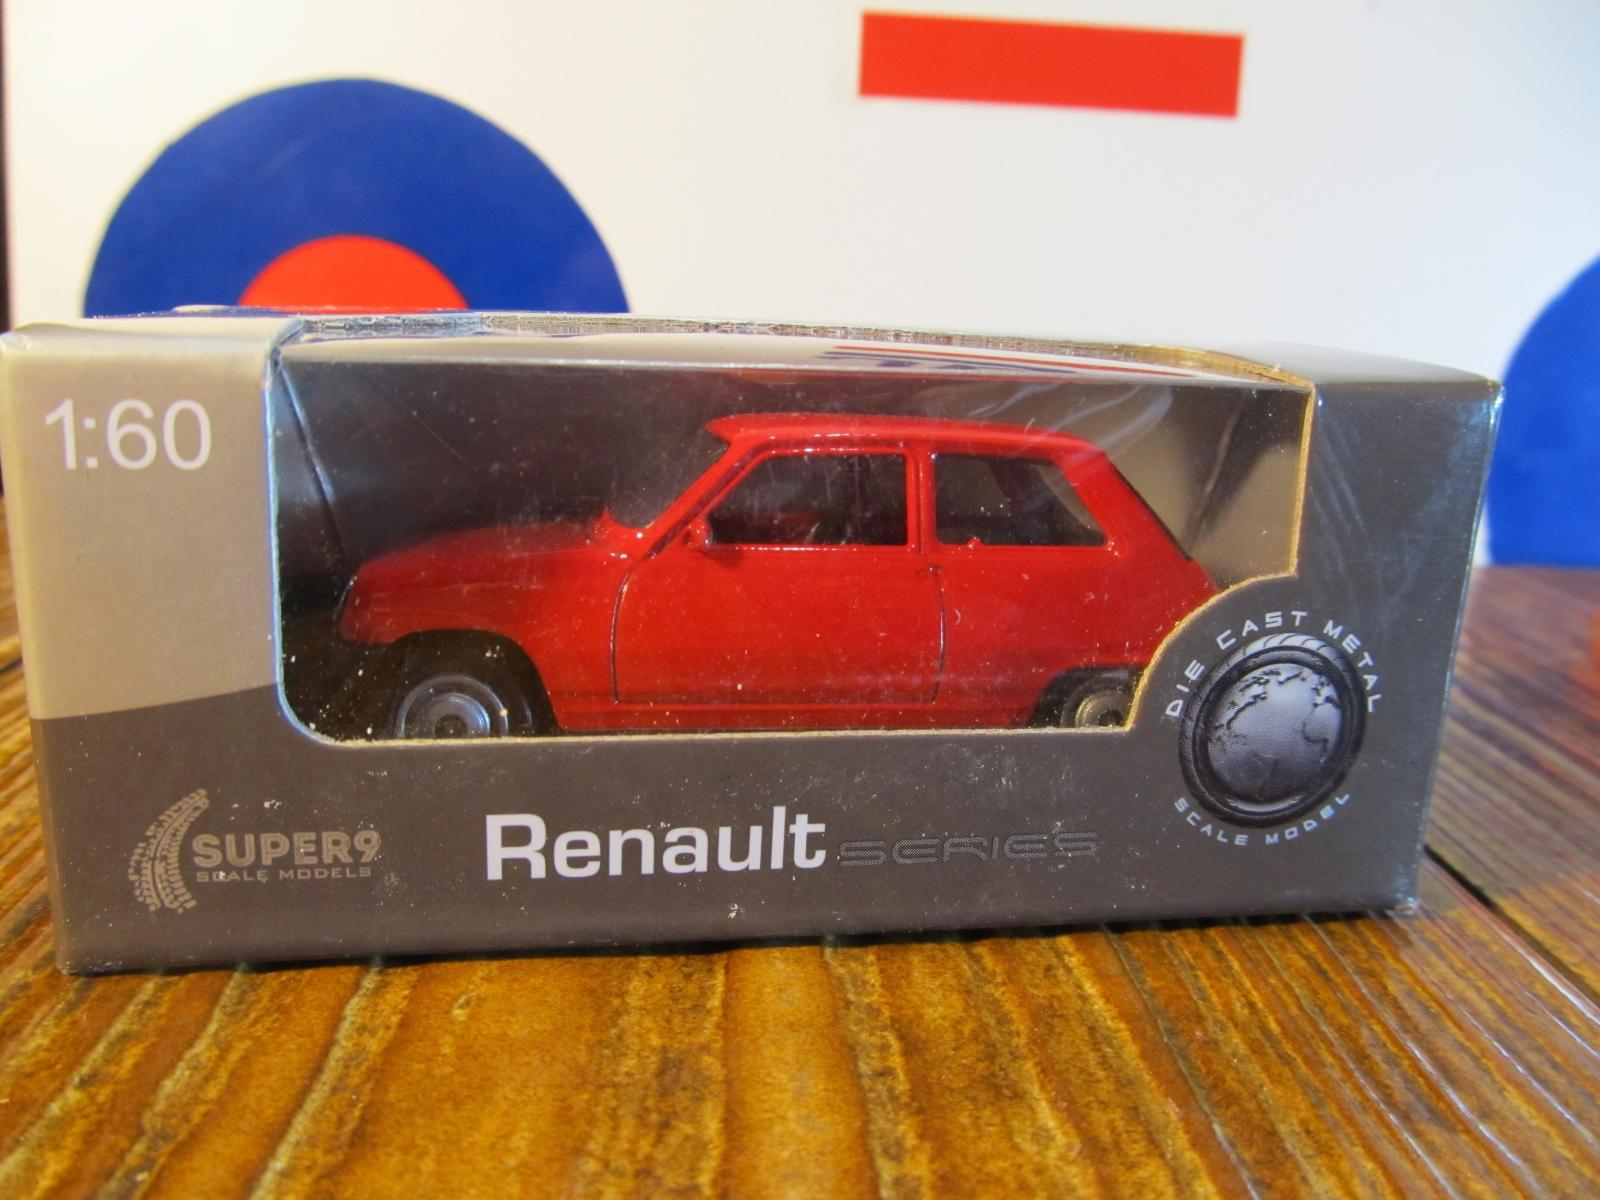 Renault - Modely automobilů